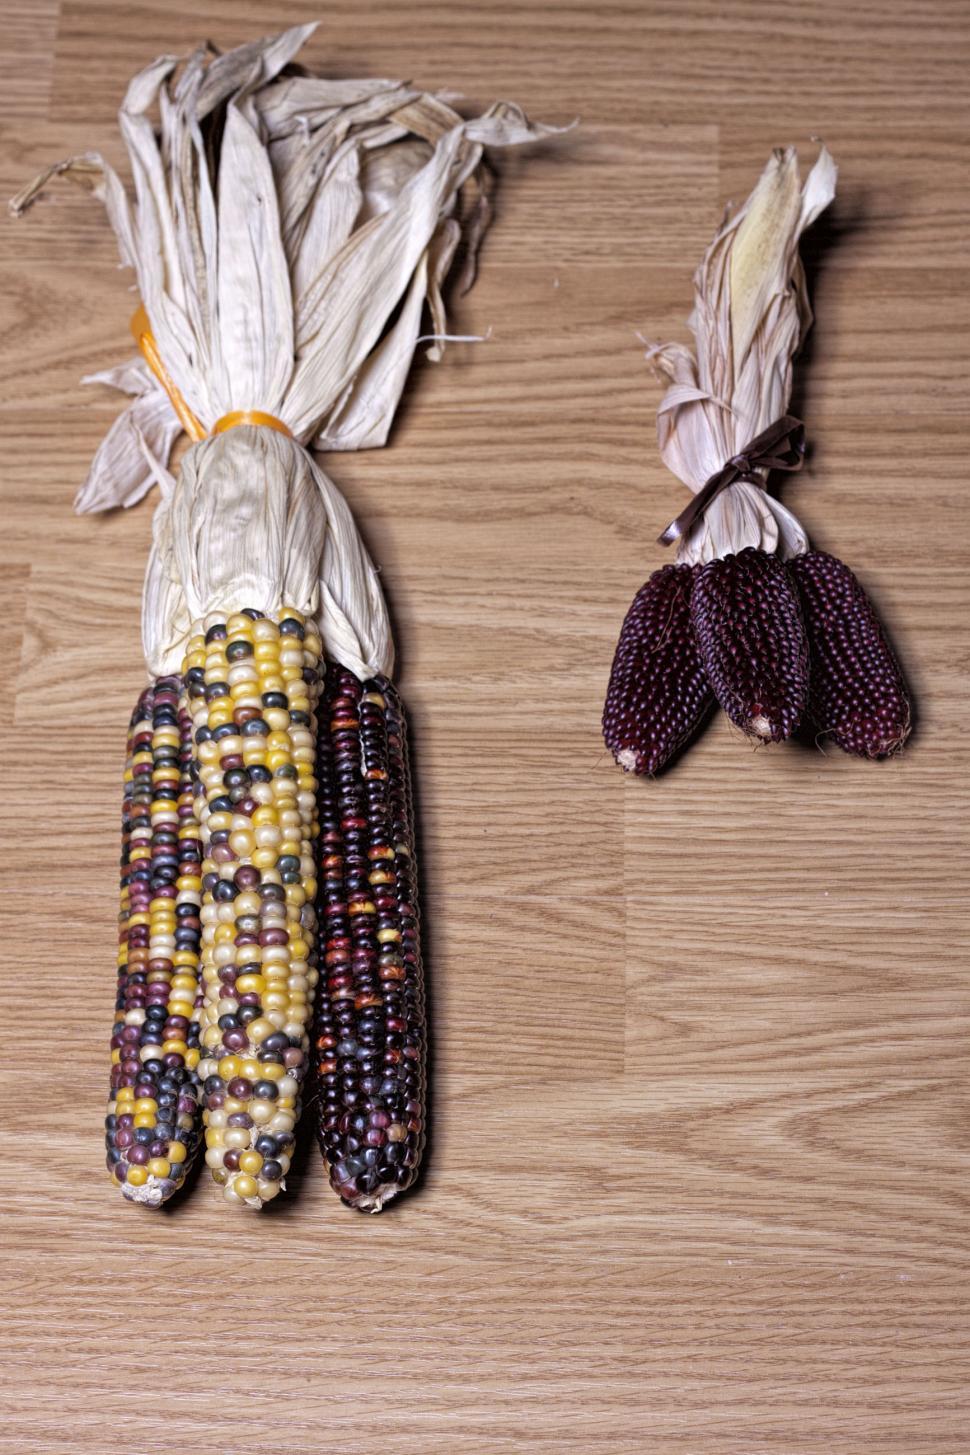 Free Image of Corn 